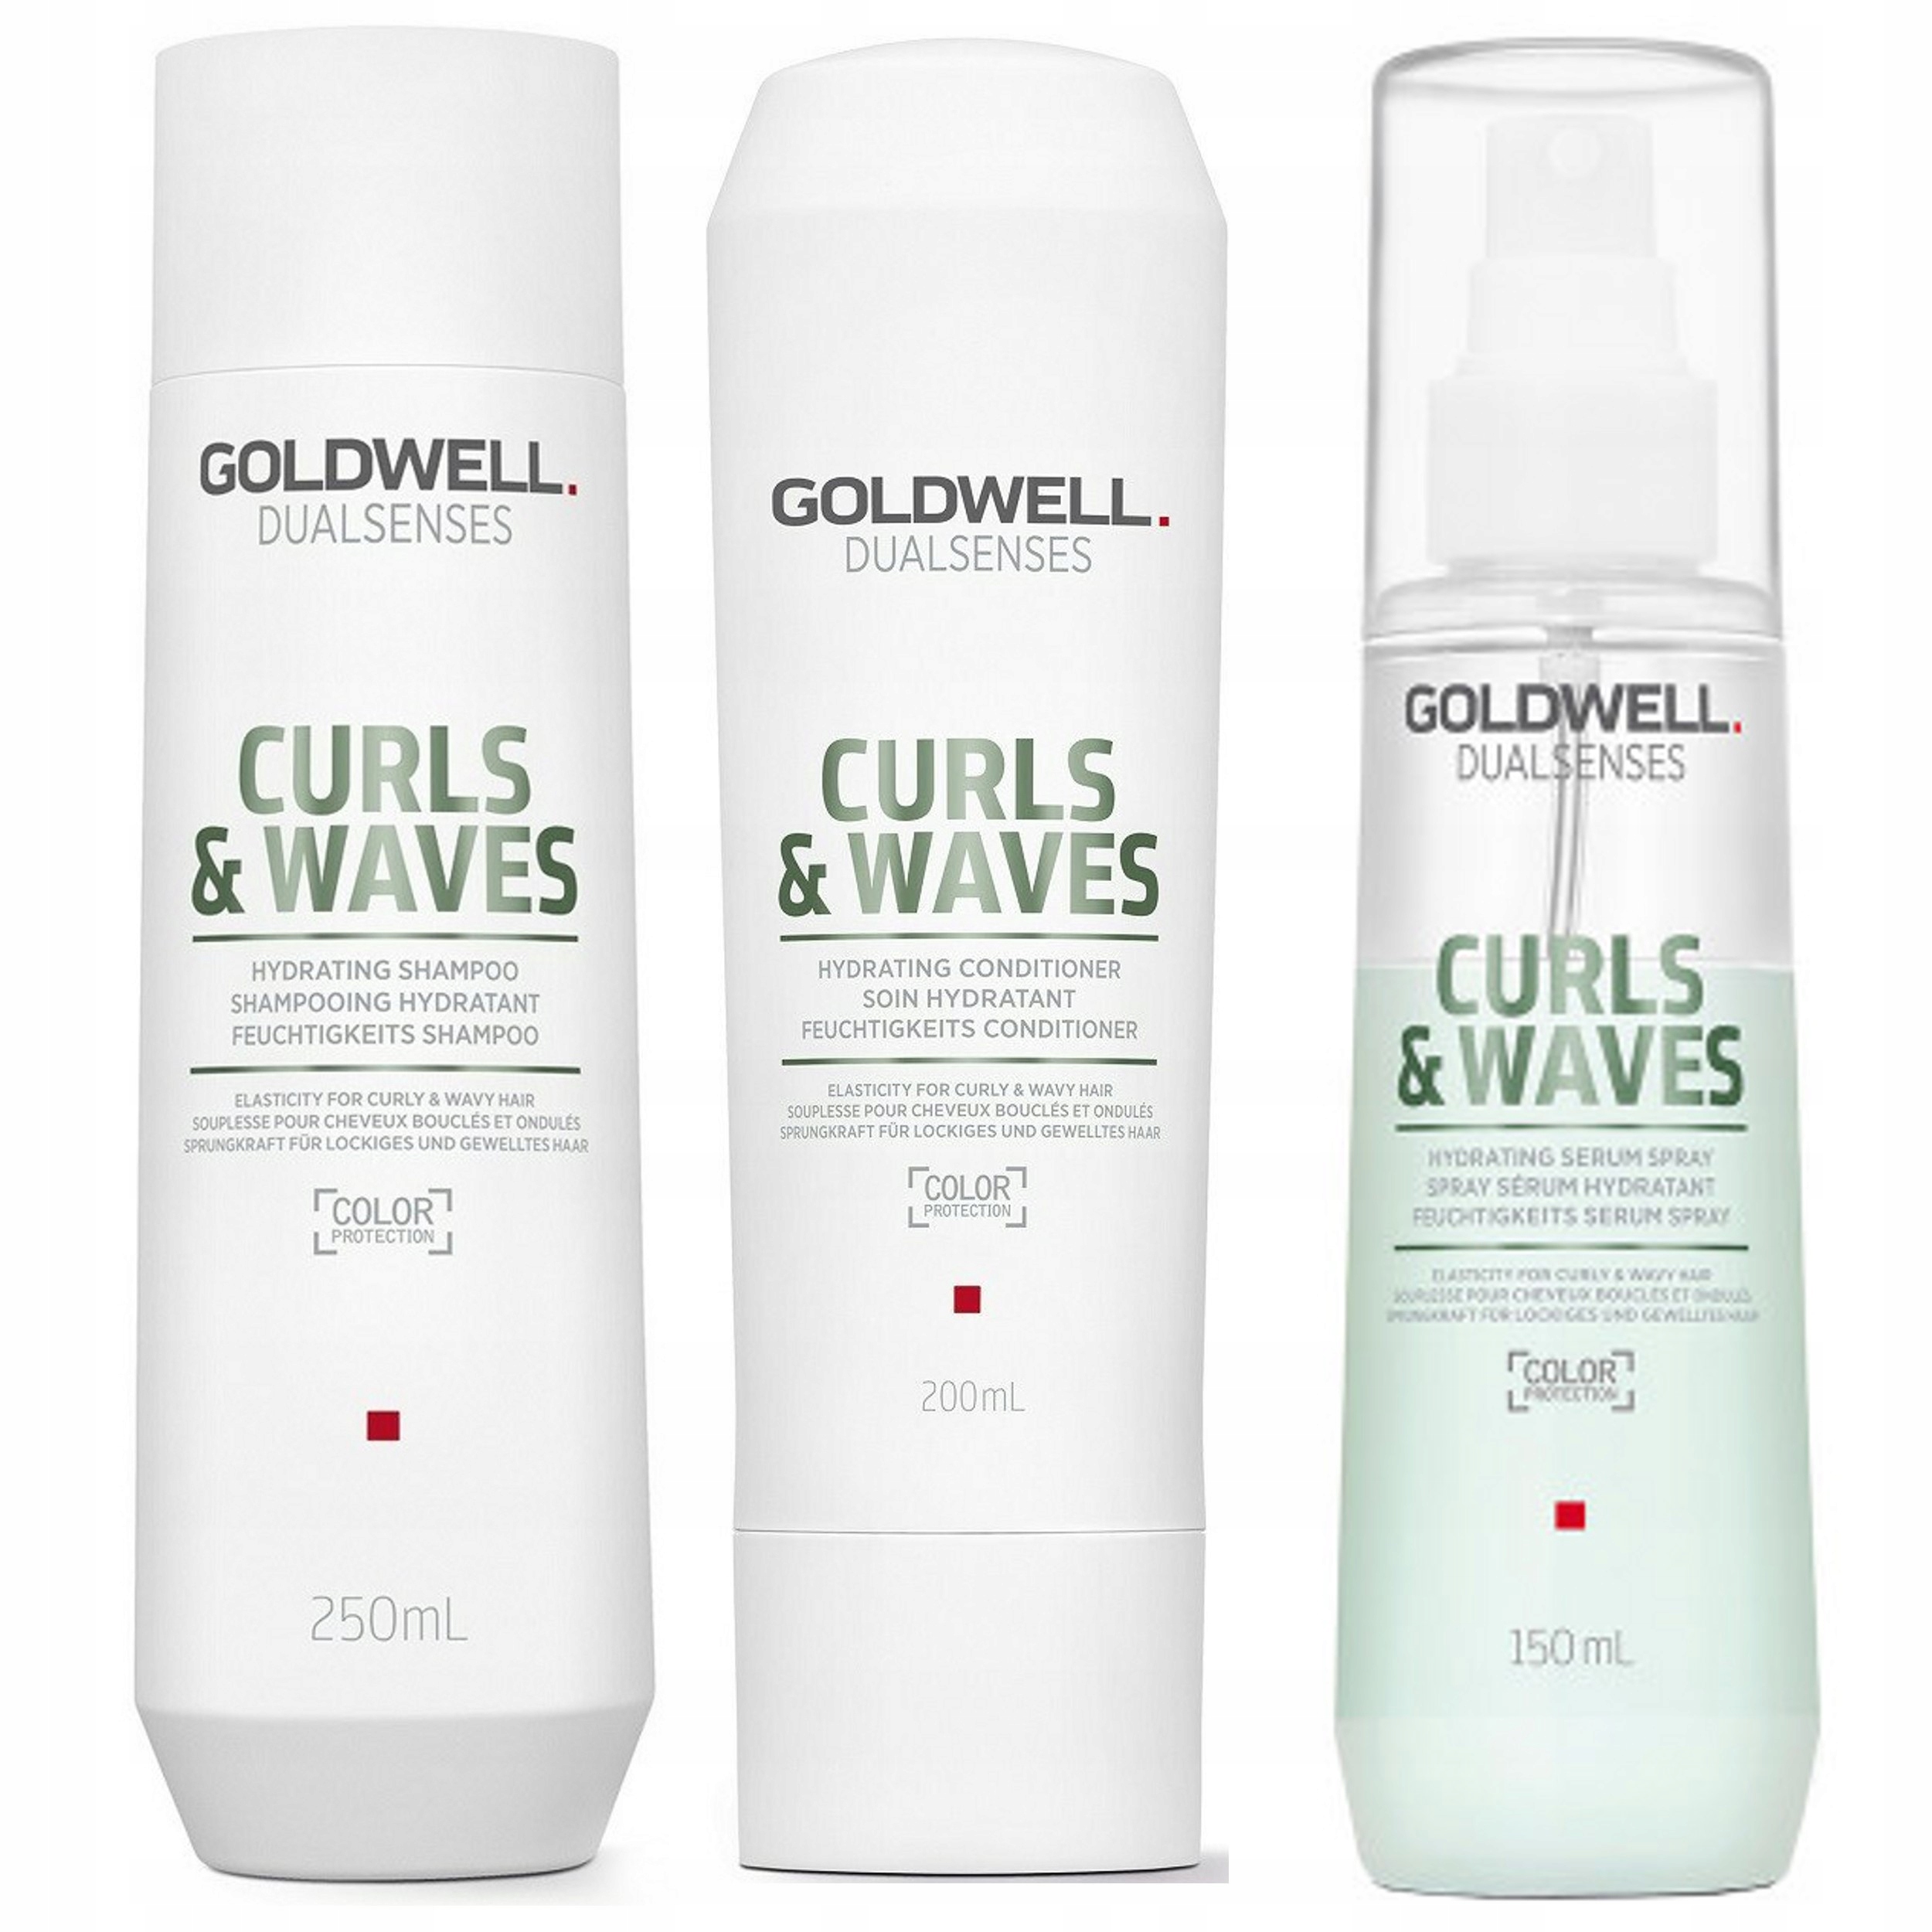 goldwell curly twist szampon opinie